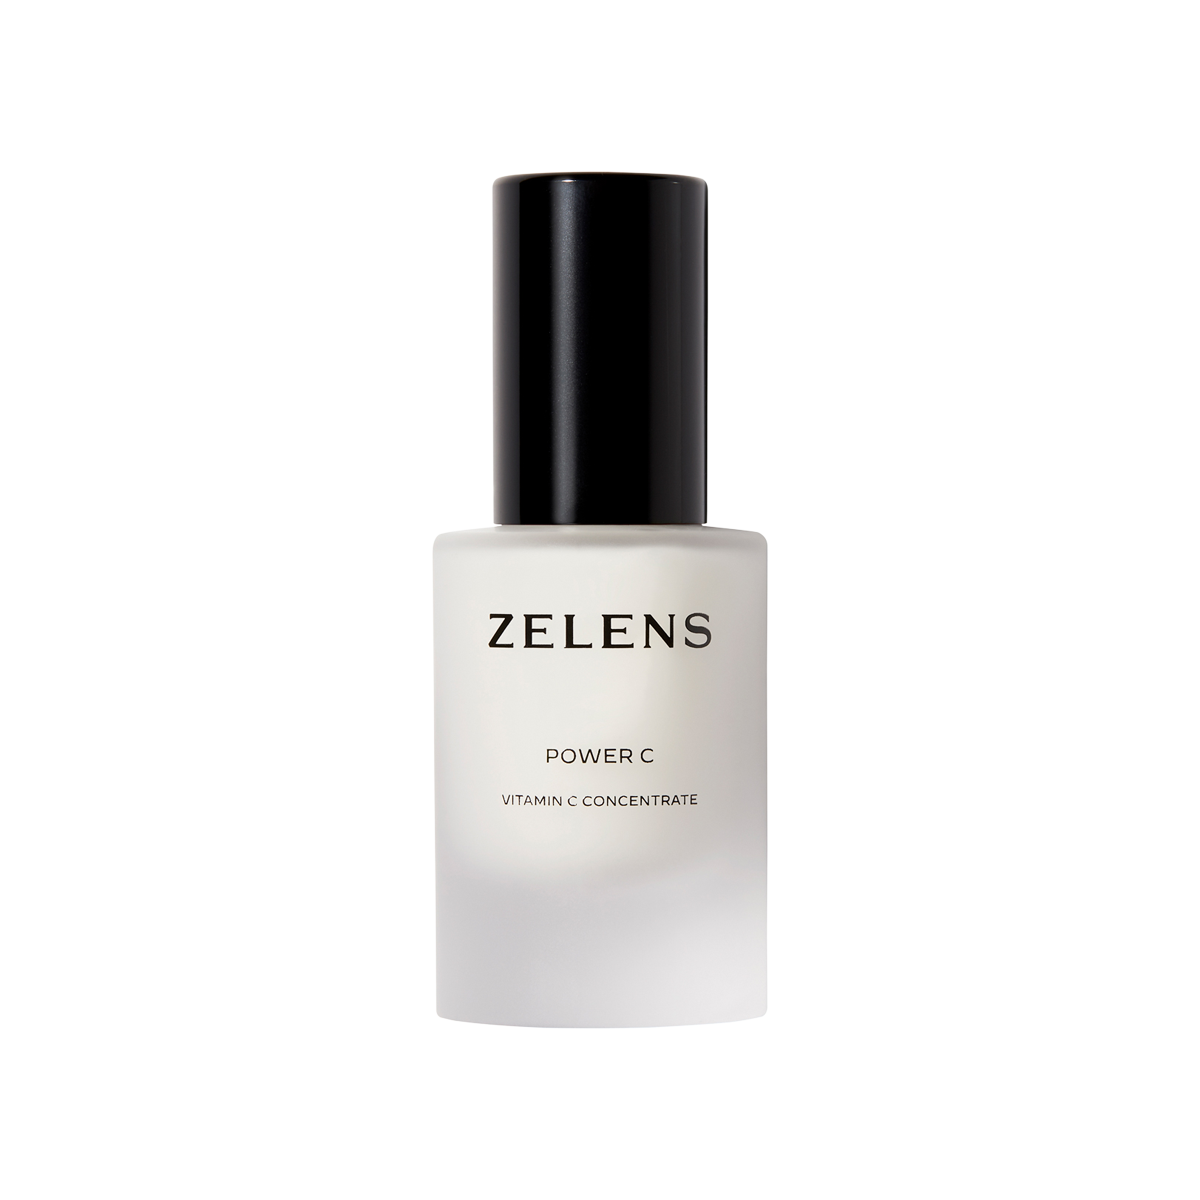 Zelens - Power C Collagen-boosting & Brightening